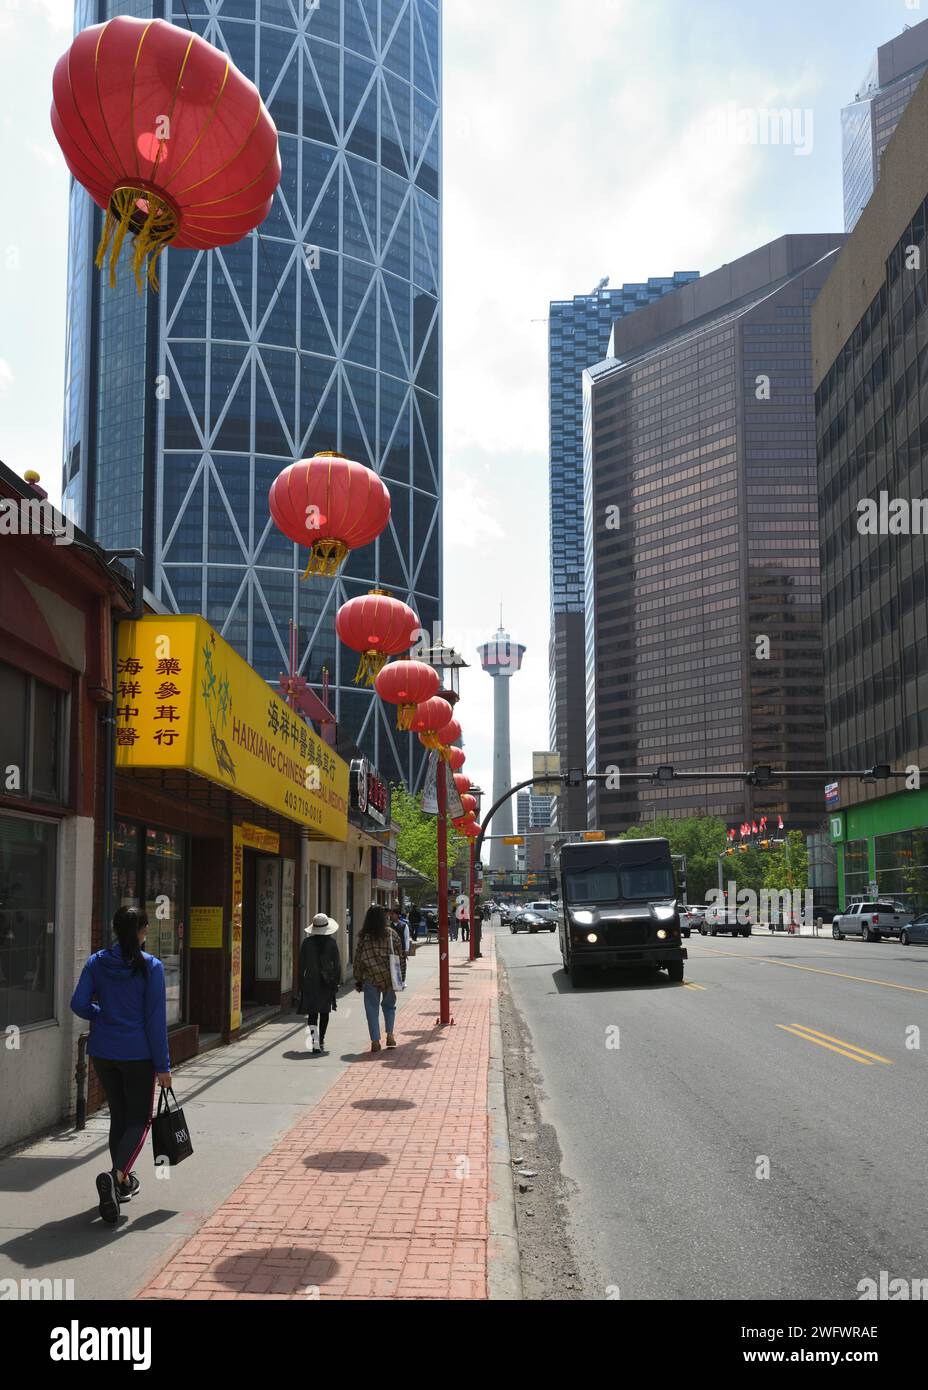 Chinesische Laternen säumen den Bürgersteig in Chinatown, Calgary, Alberta, Kanada. Stockfoto